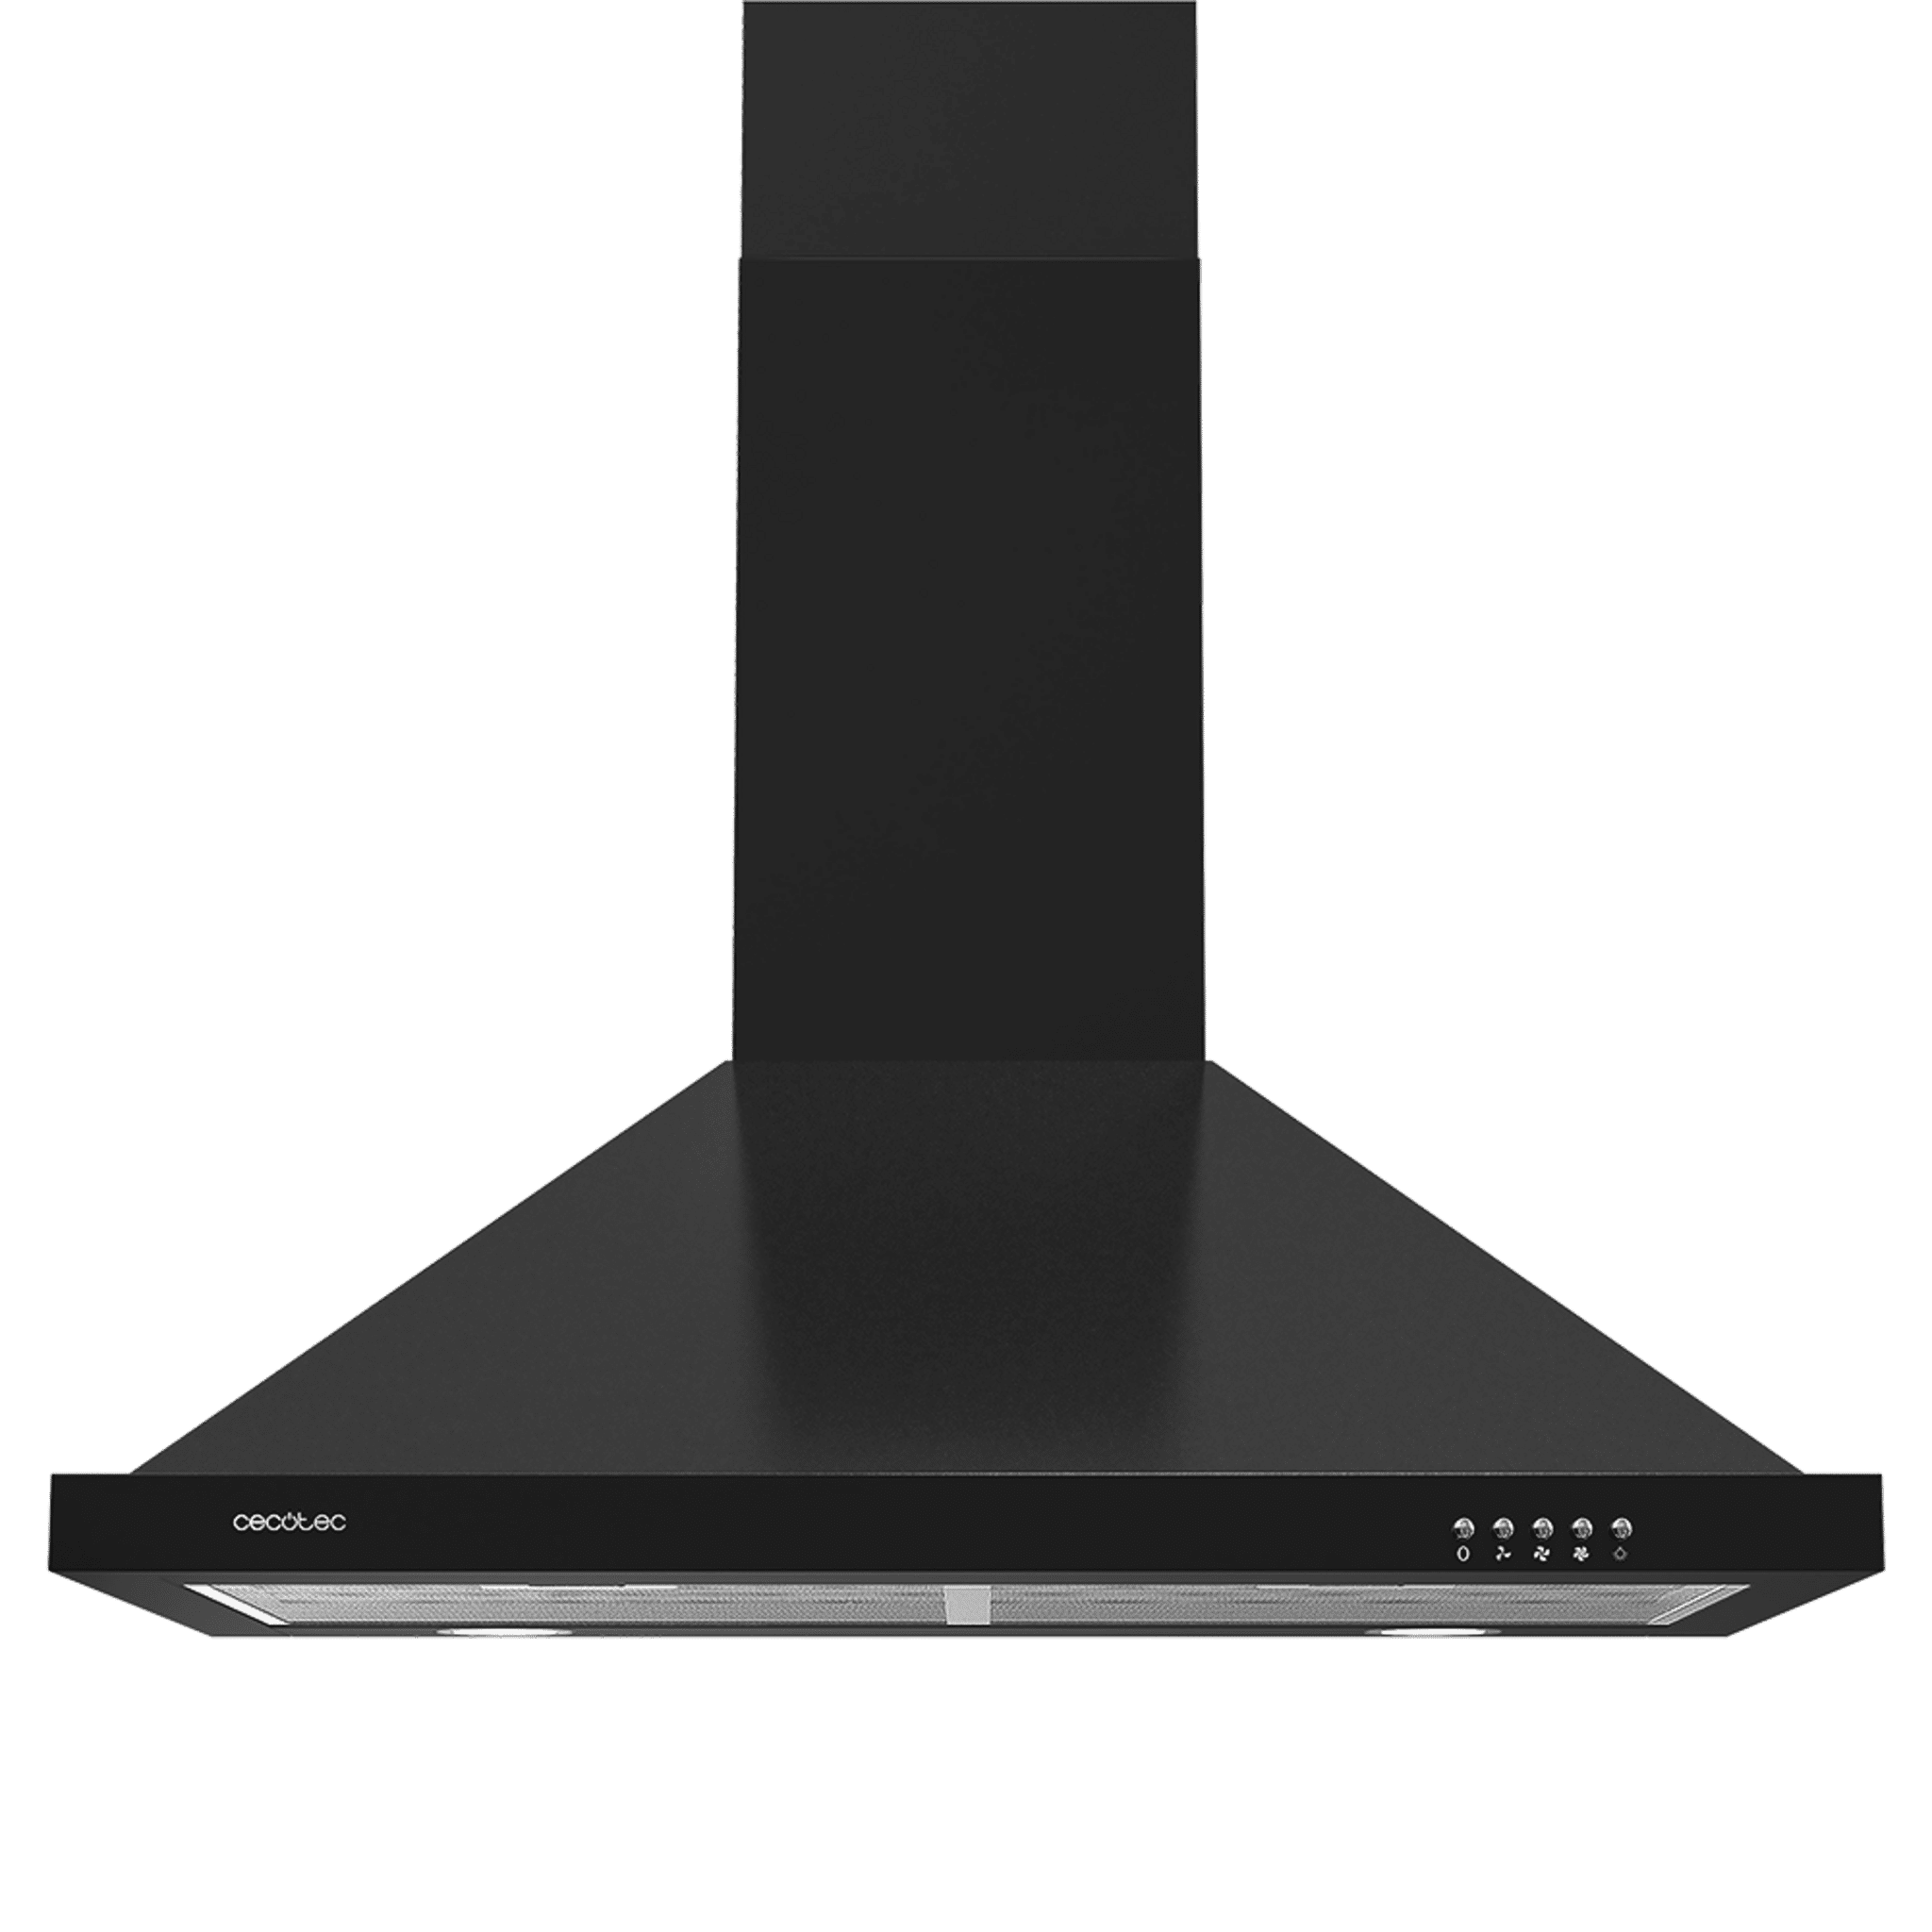 Bolero Flux PM 604300 Black C Campana extractora piramidal Cecotec